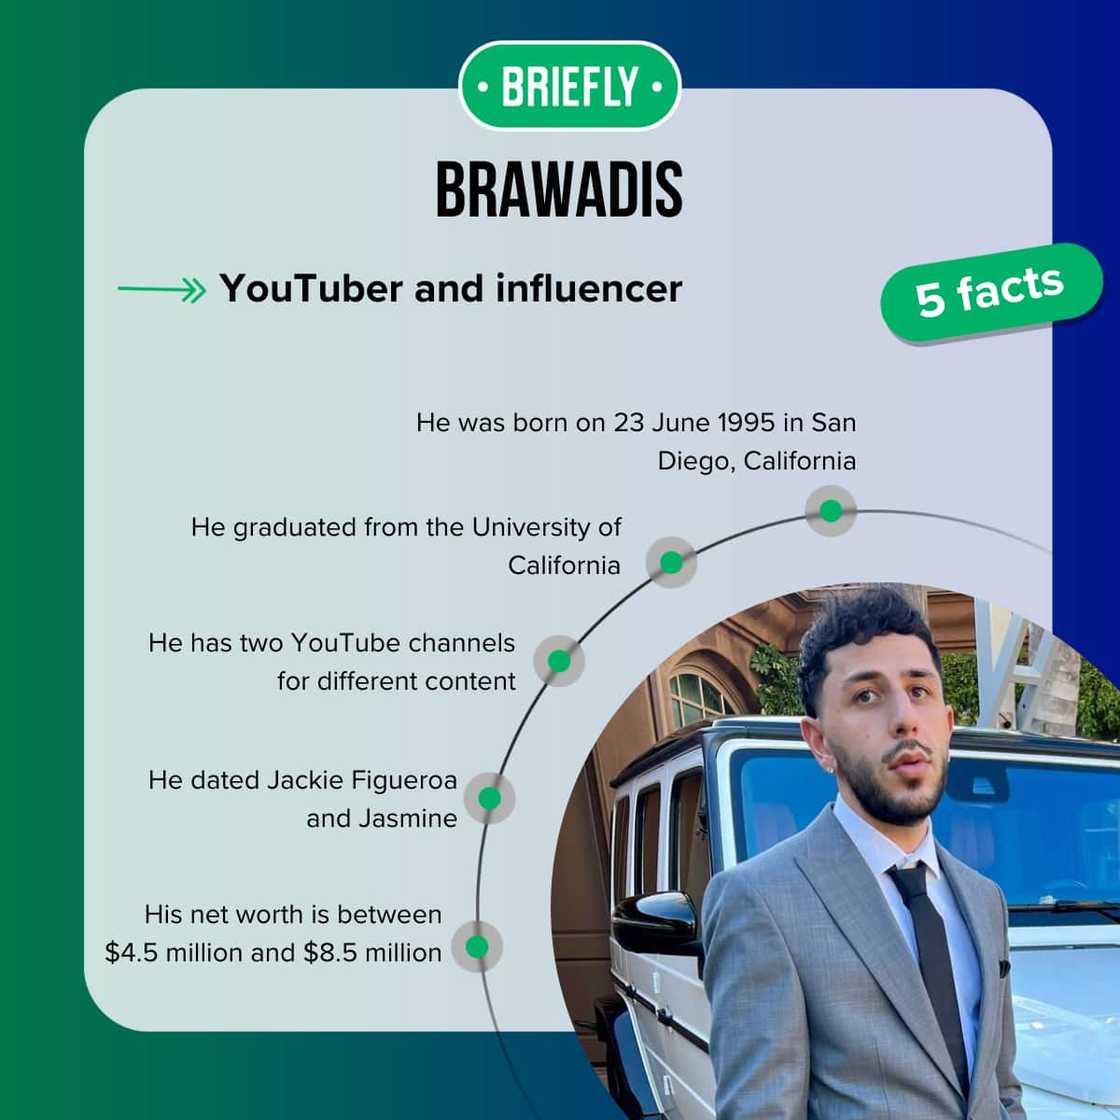 Brandon' facts